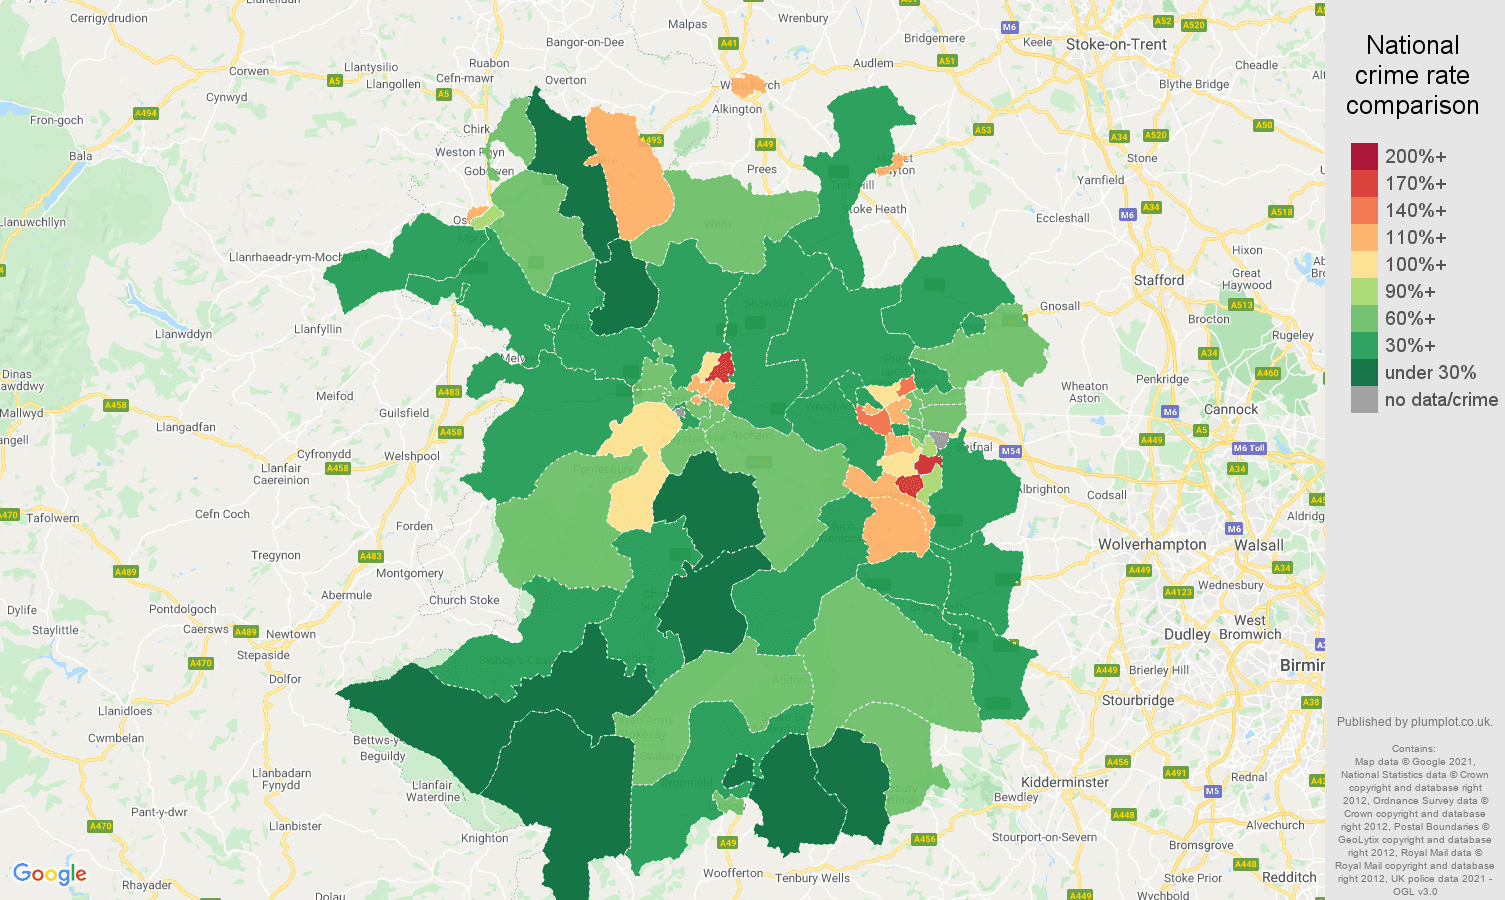 Shropshire criminal damage and arson crime rate comparison map